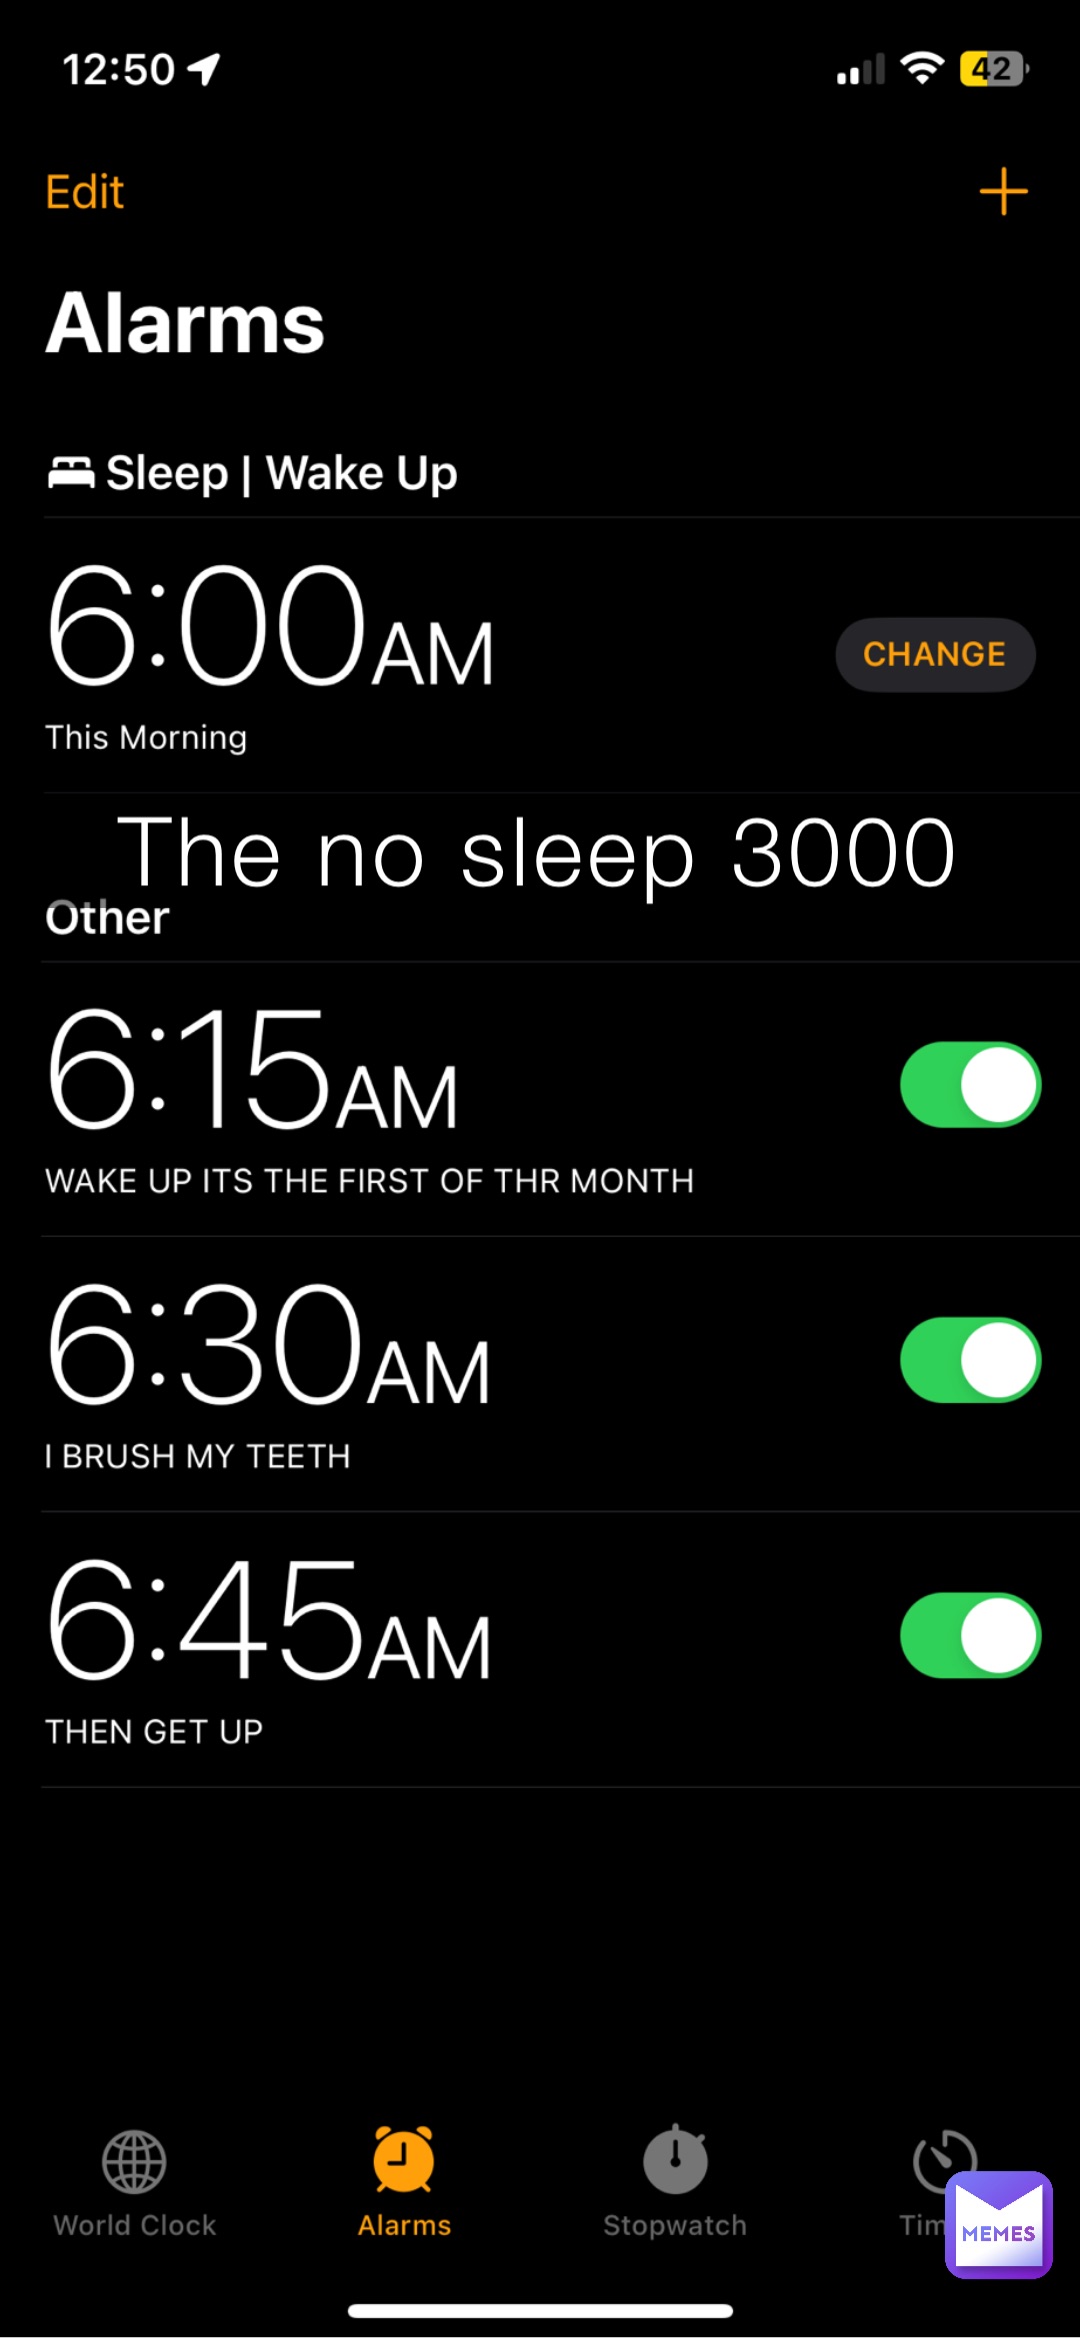 The no sleep 3000